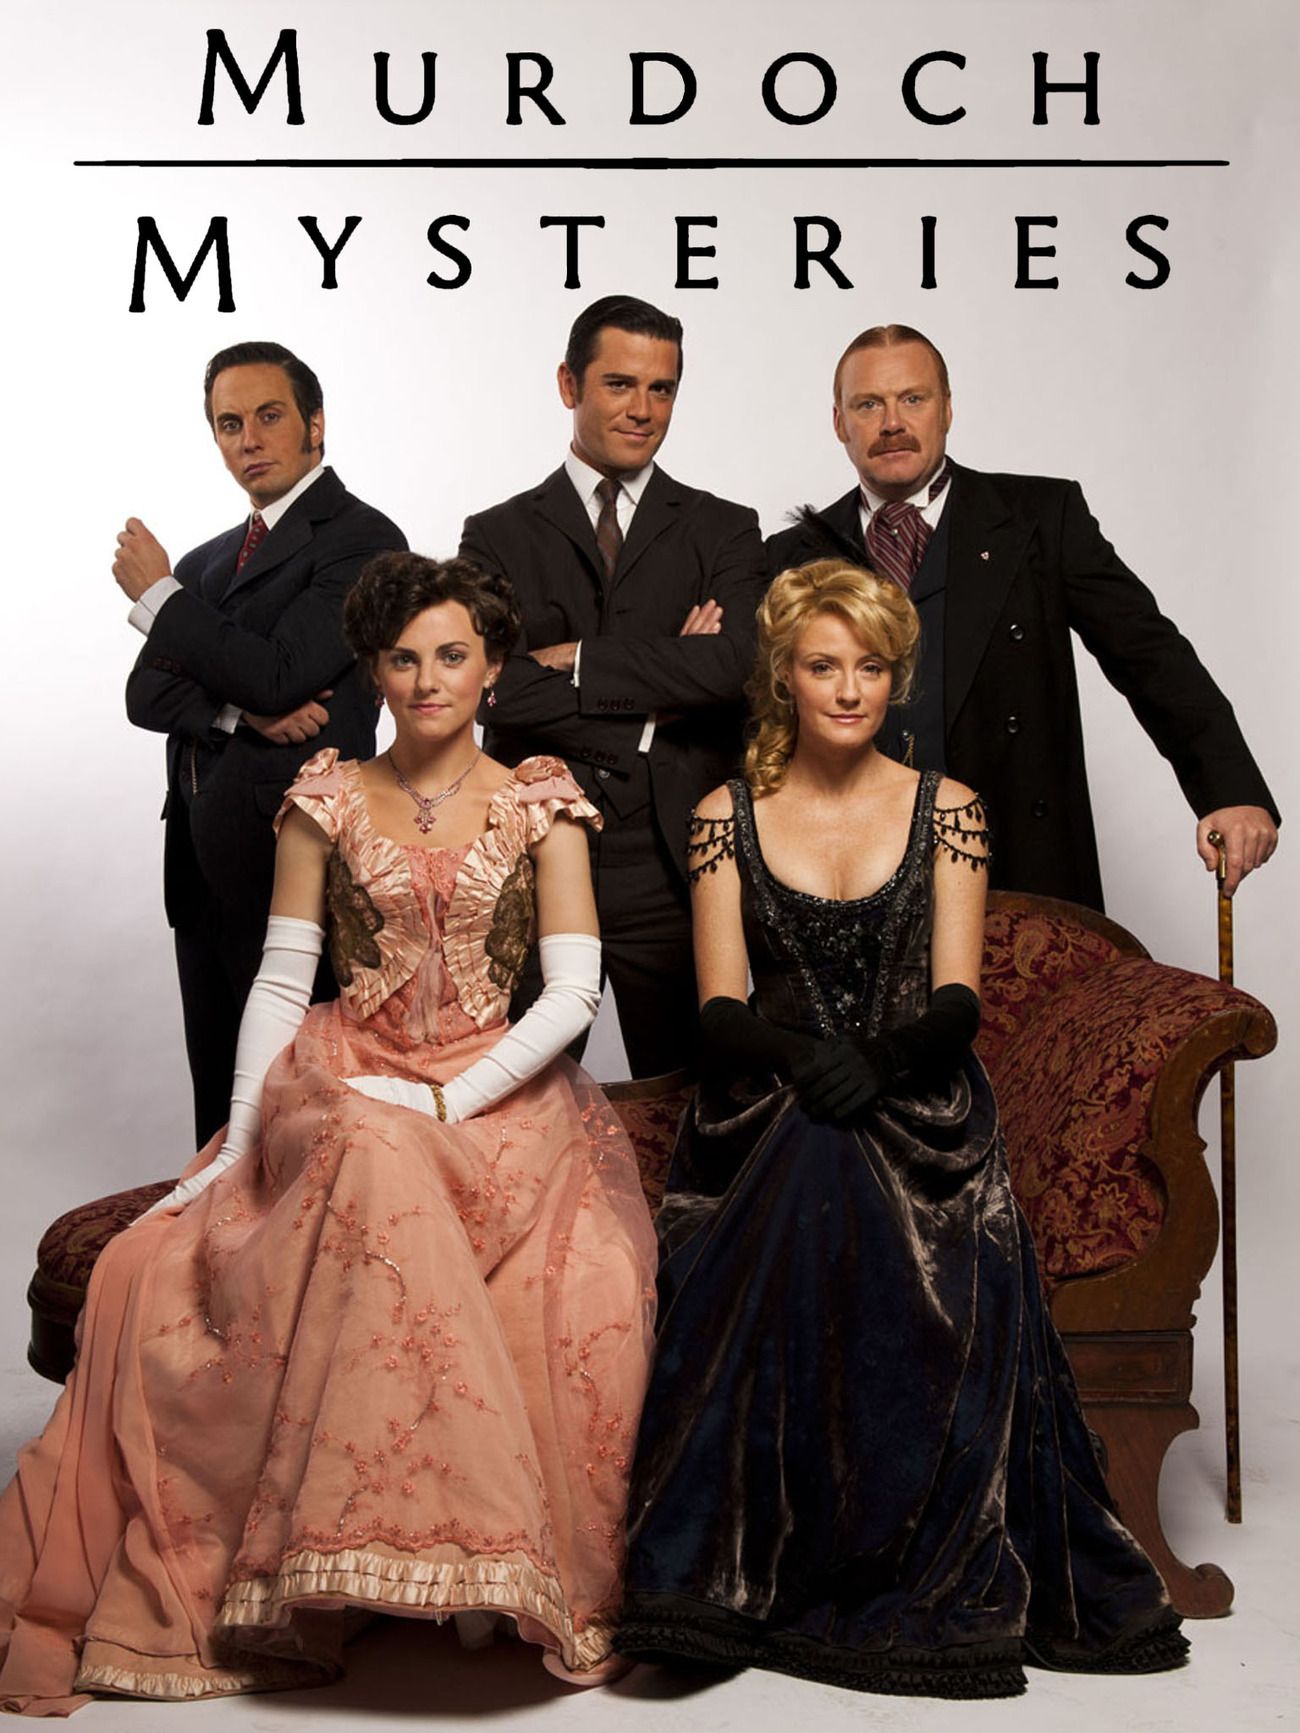 Murdoch-mysteries-poster